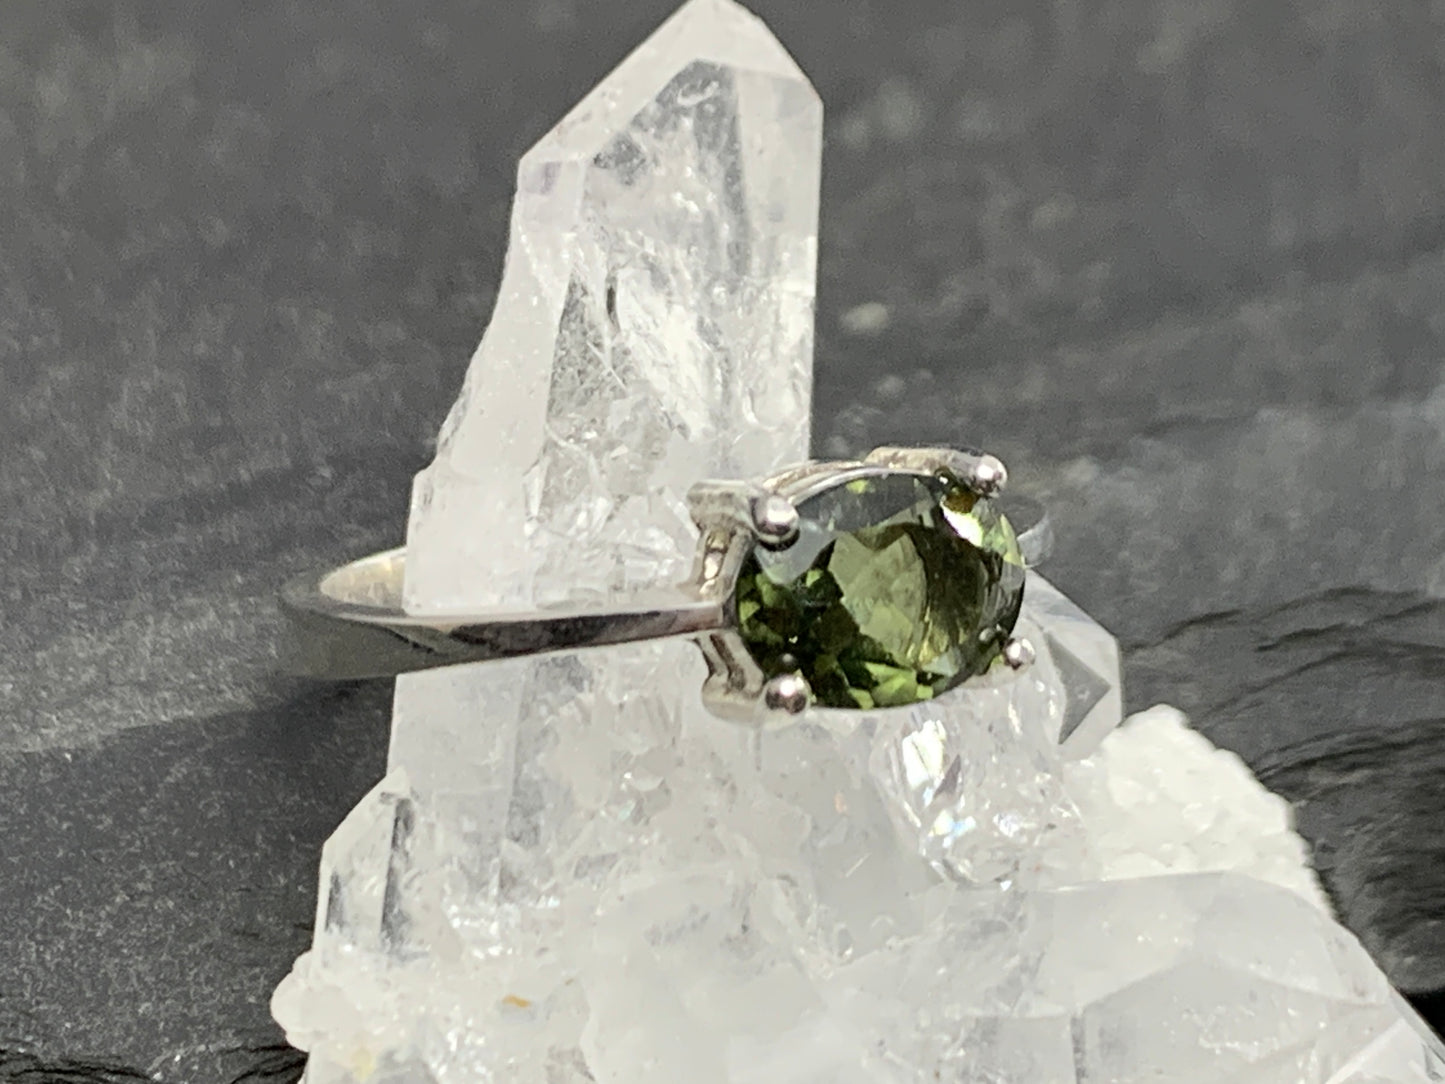 Ring with Moldavite